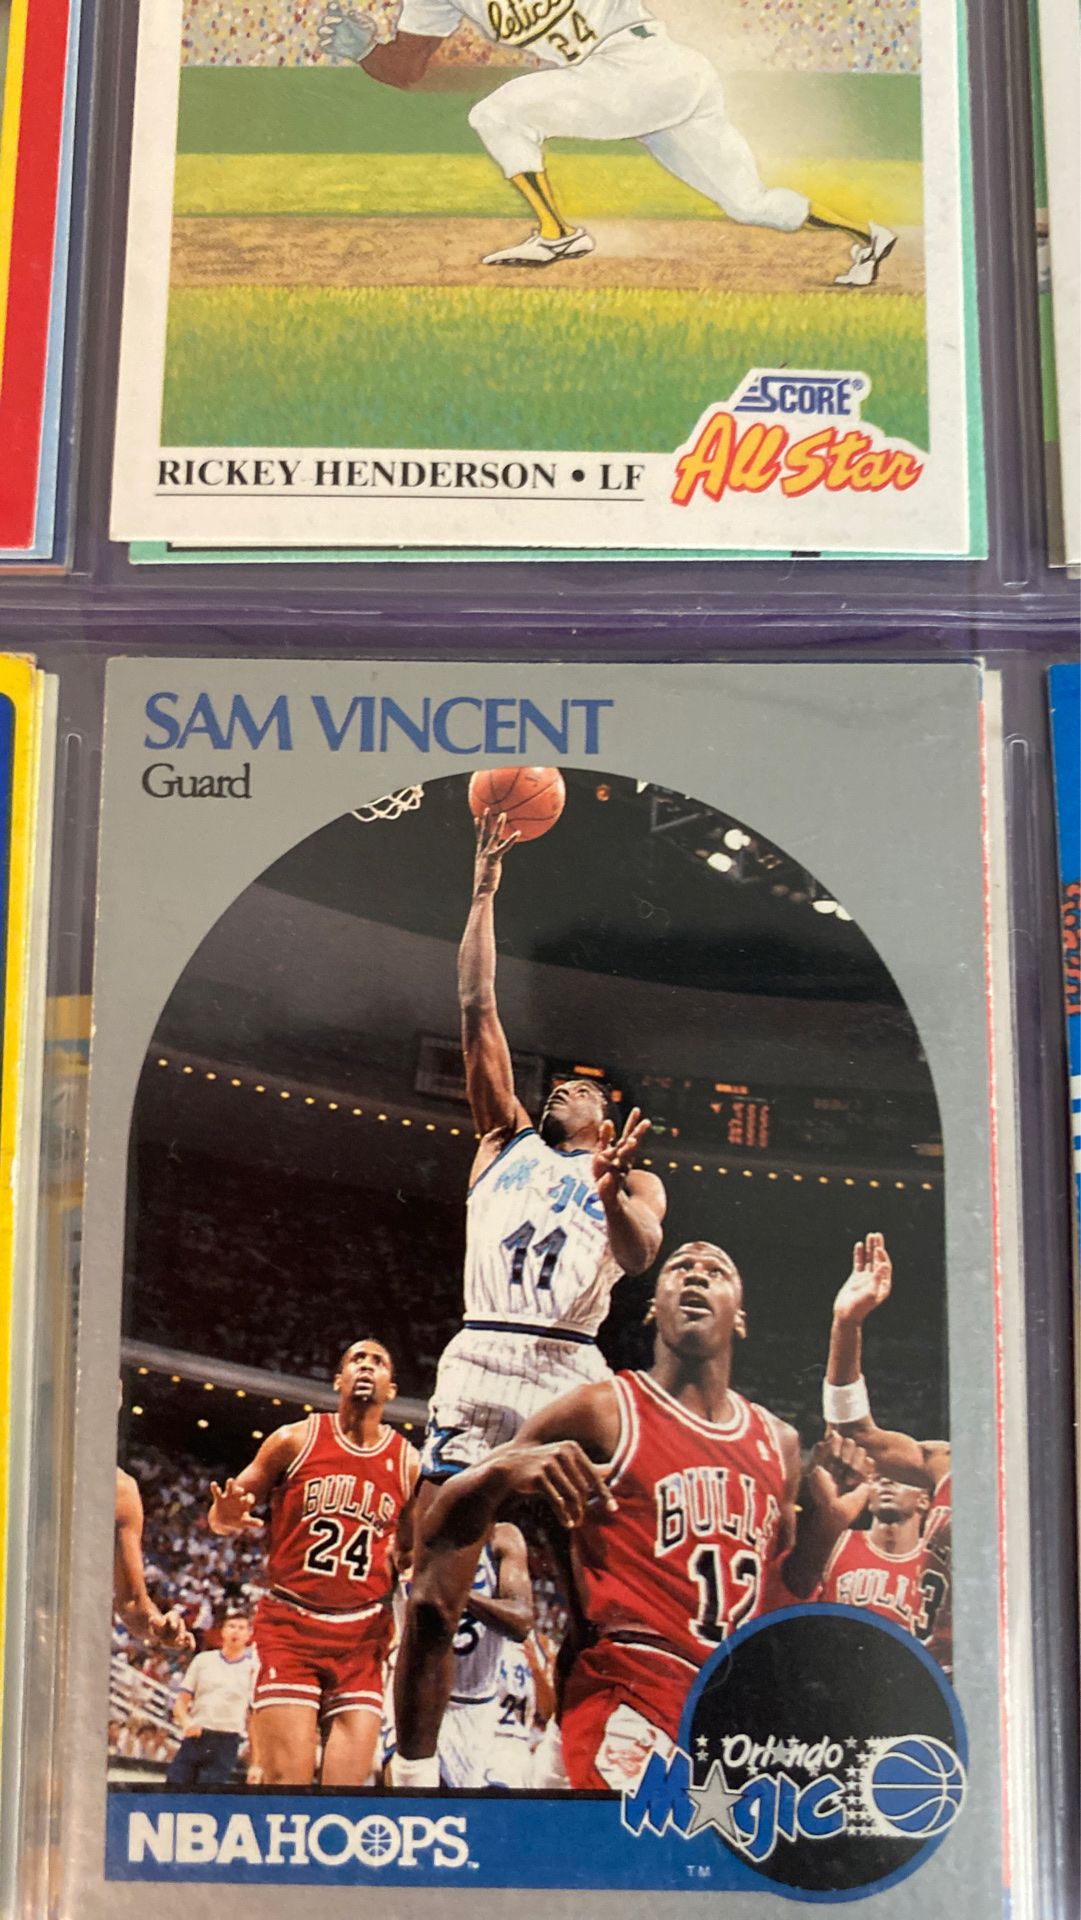 Variety of 1991 baseball and football cards + Sam Vincent error card with Michael Jordan